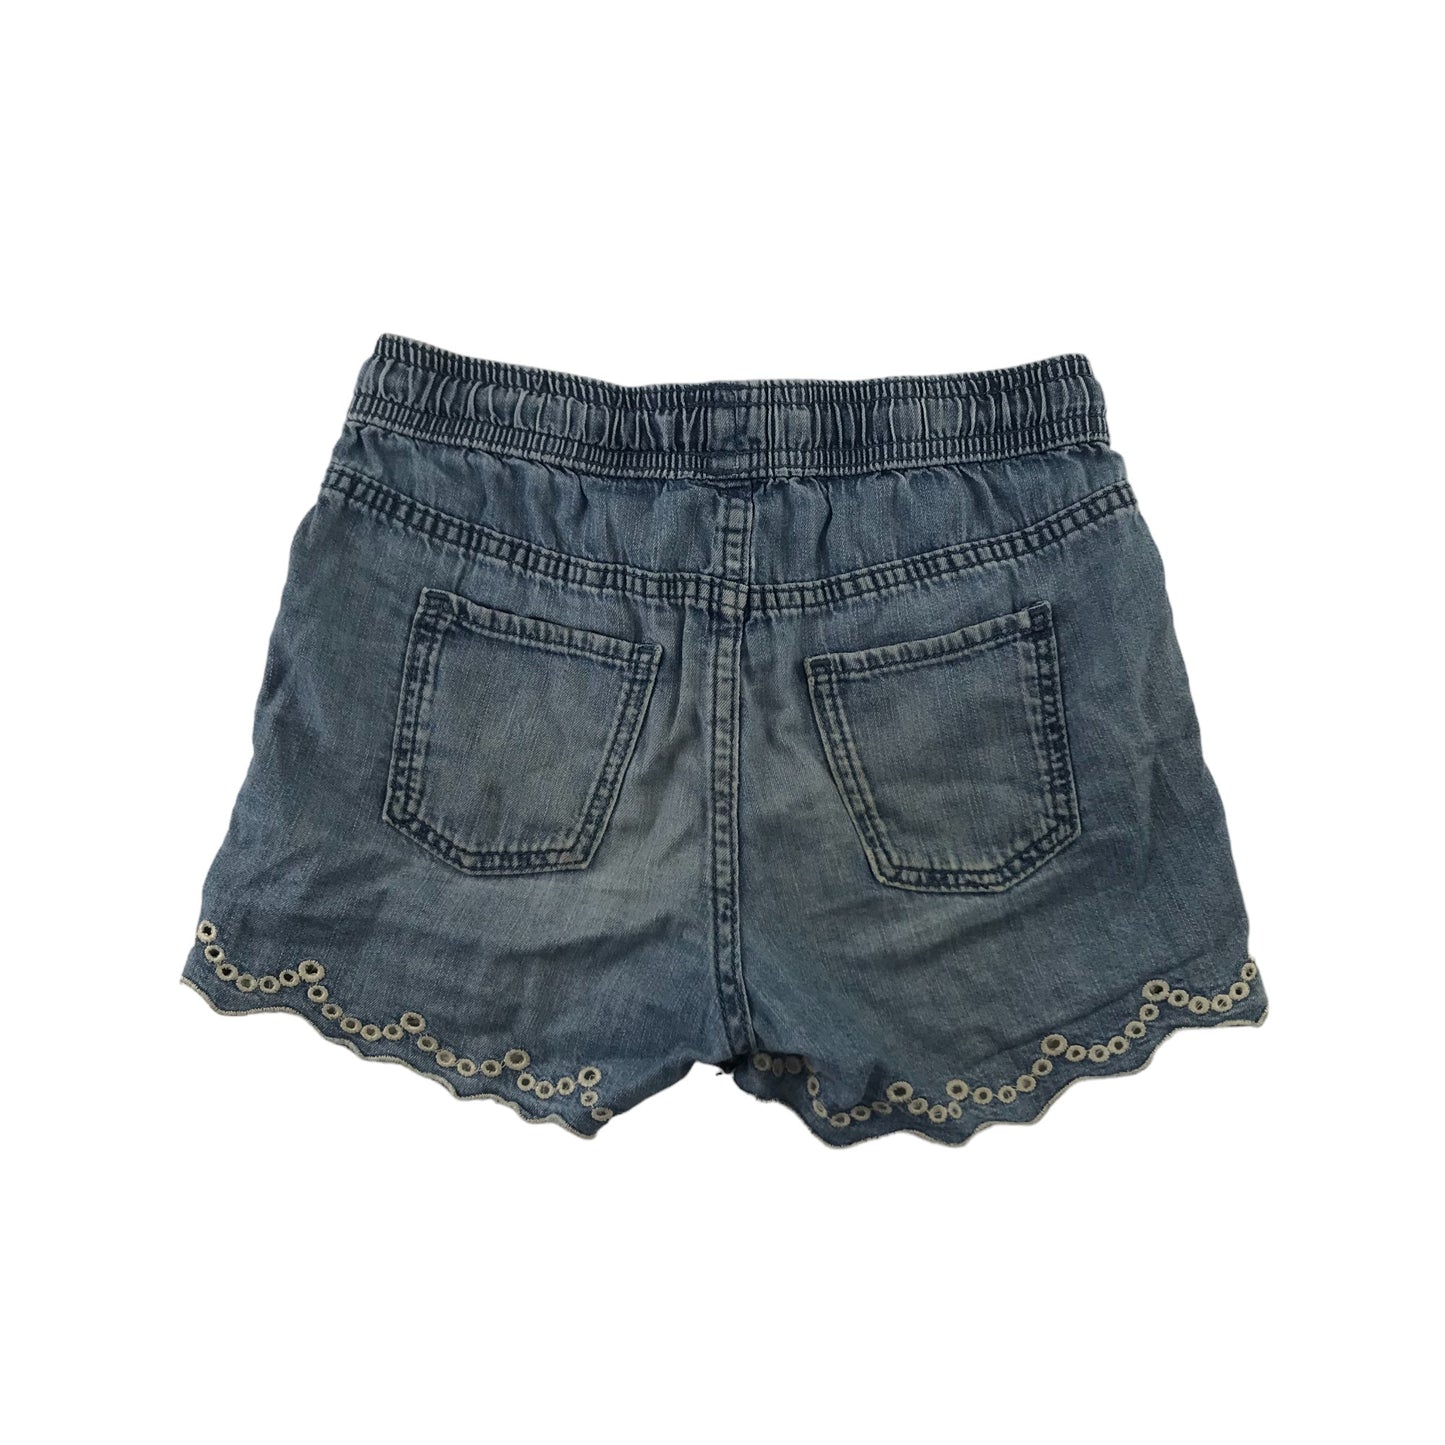 Primark shorts 6-7 years blue denim embroidered patterned hem cotton